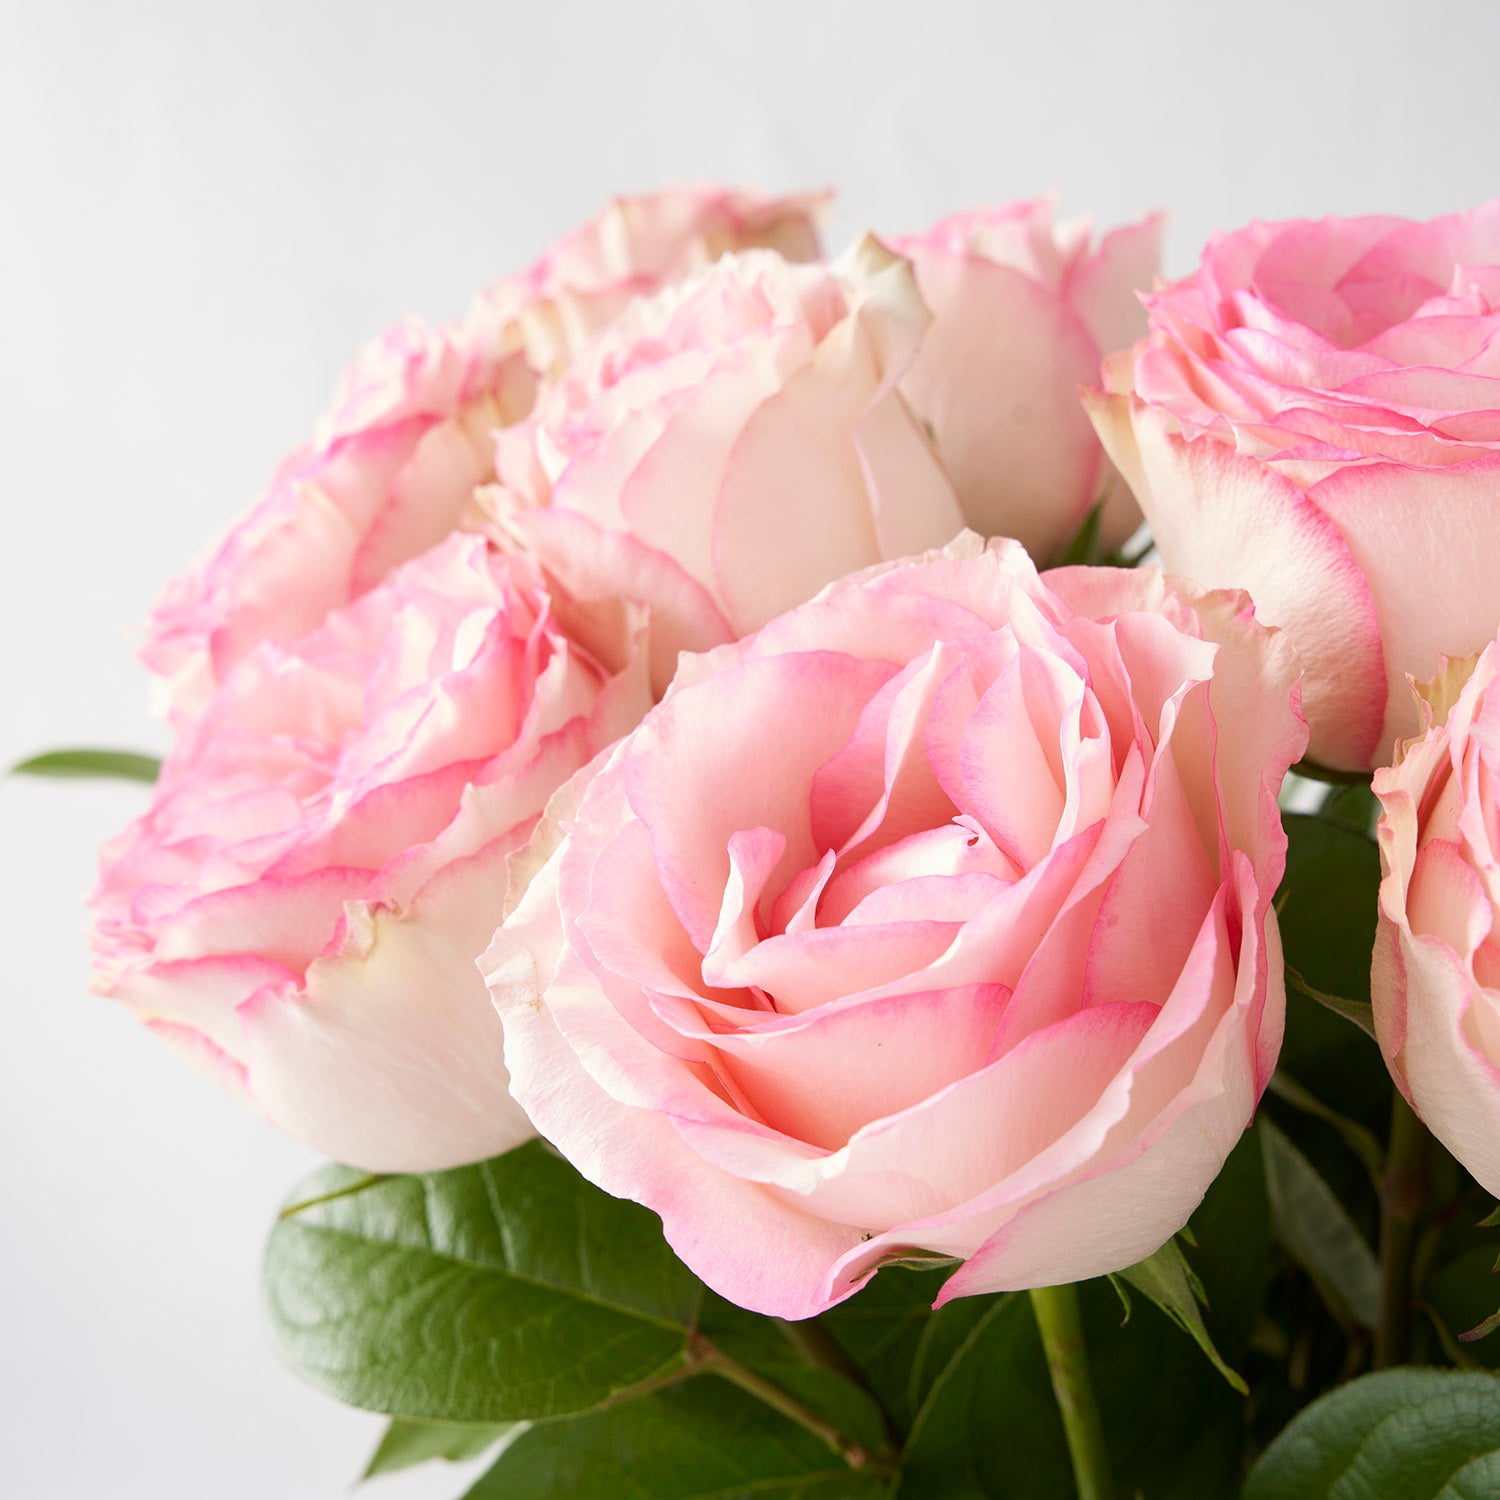 Arrangement floral de 12 roses « Esperance »